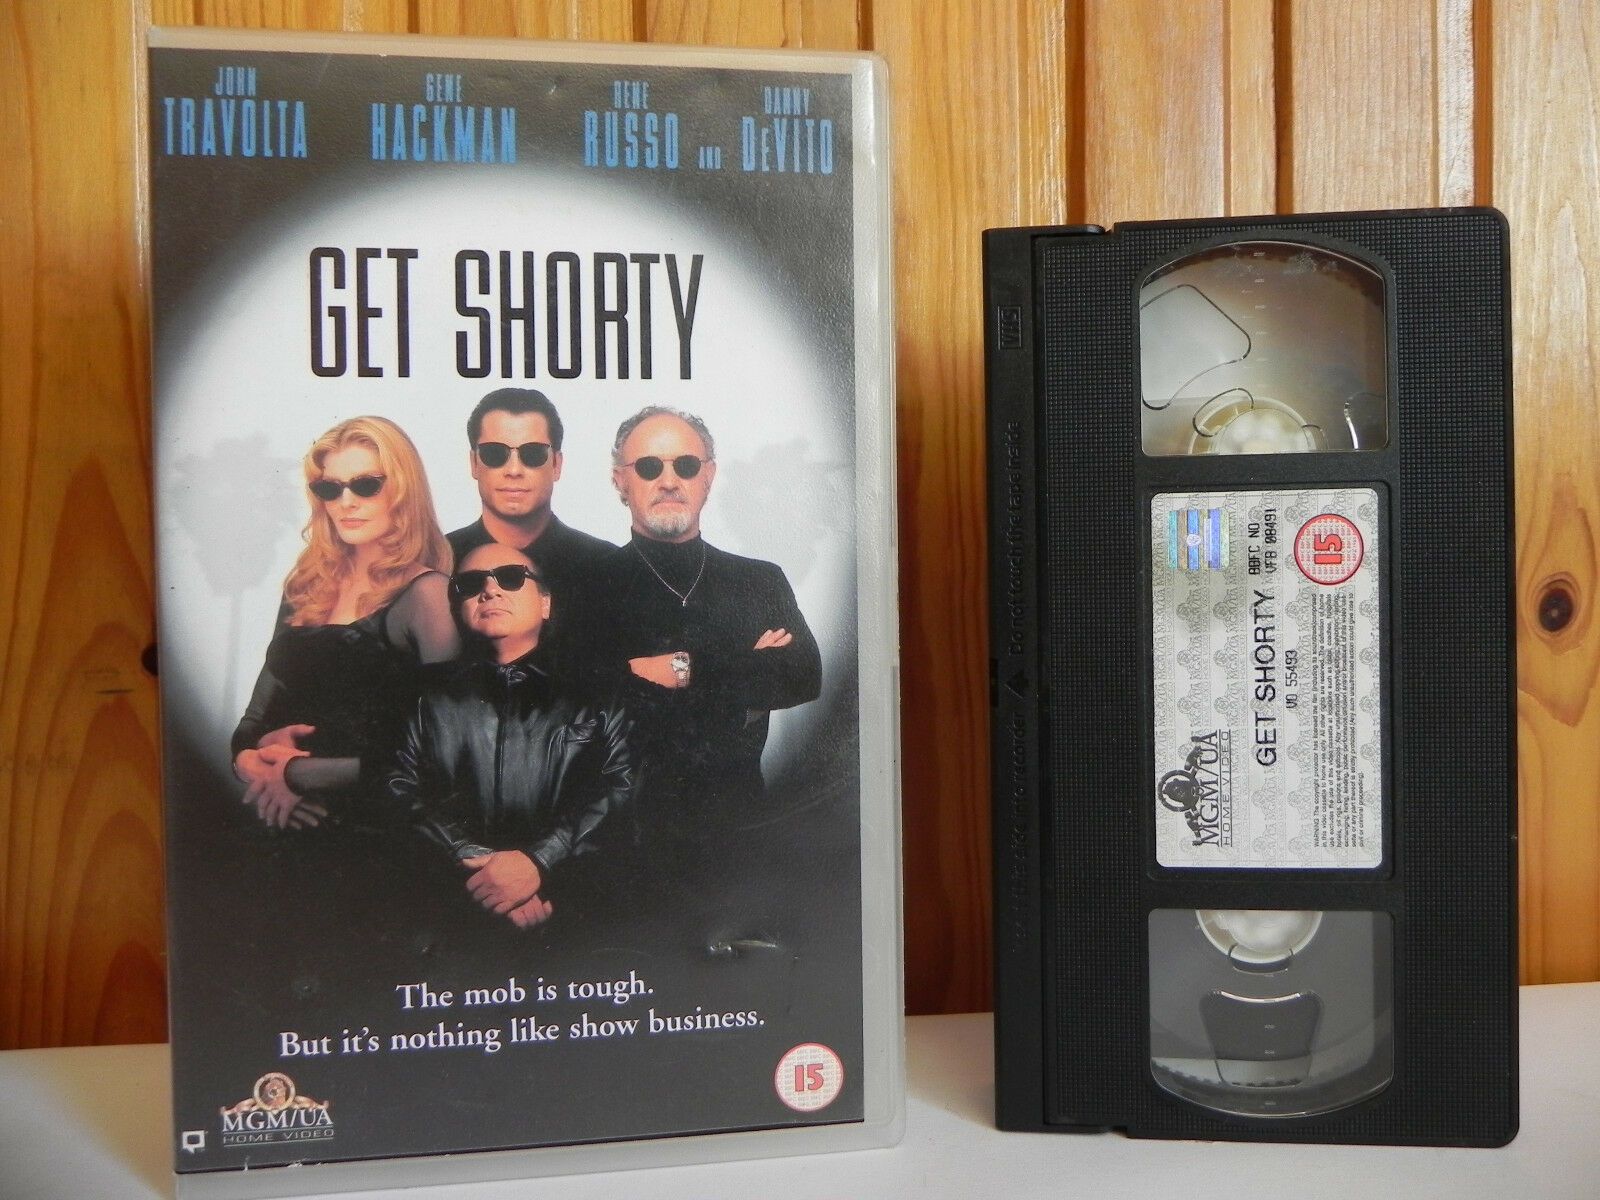 Get Shorty - MGM/UA - Comedy - Action - John Travolta - Gene Hackman - Pal VHS-